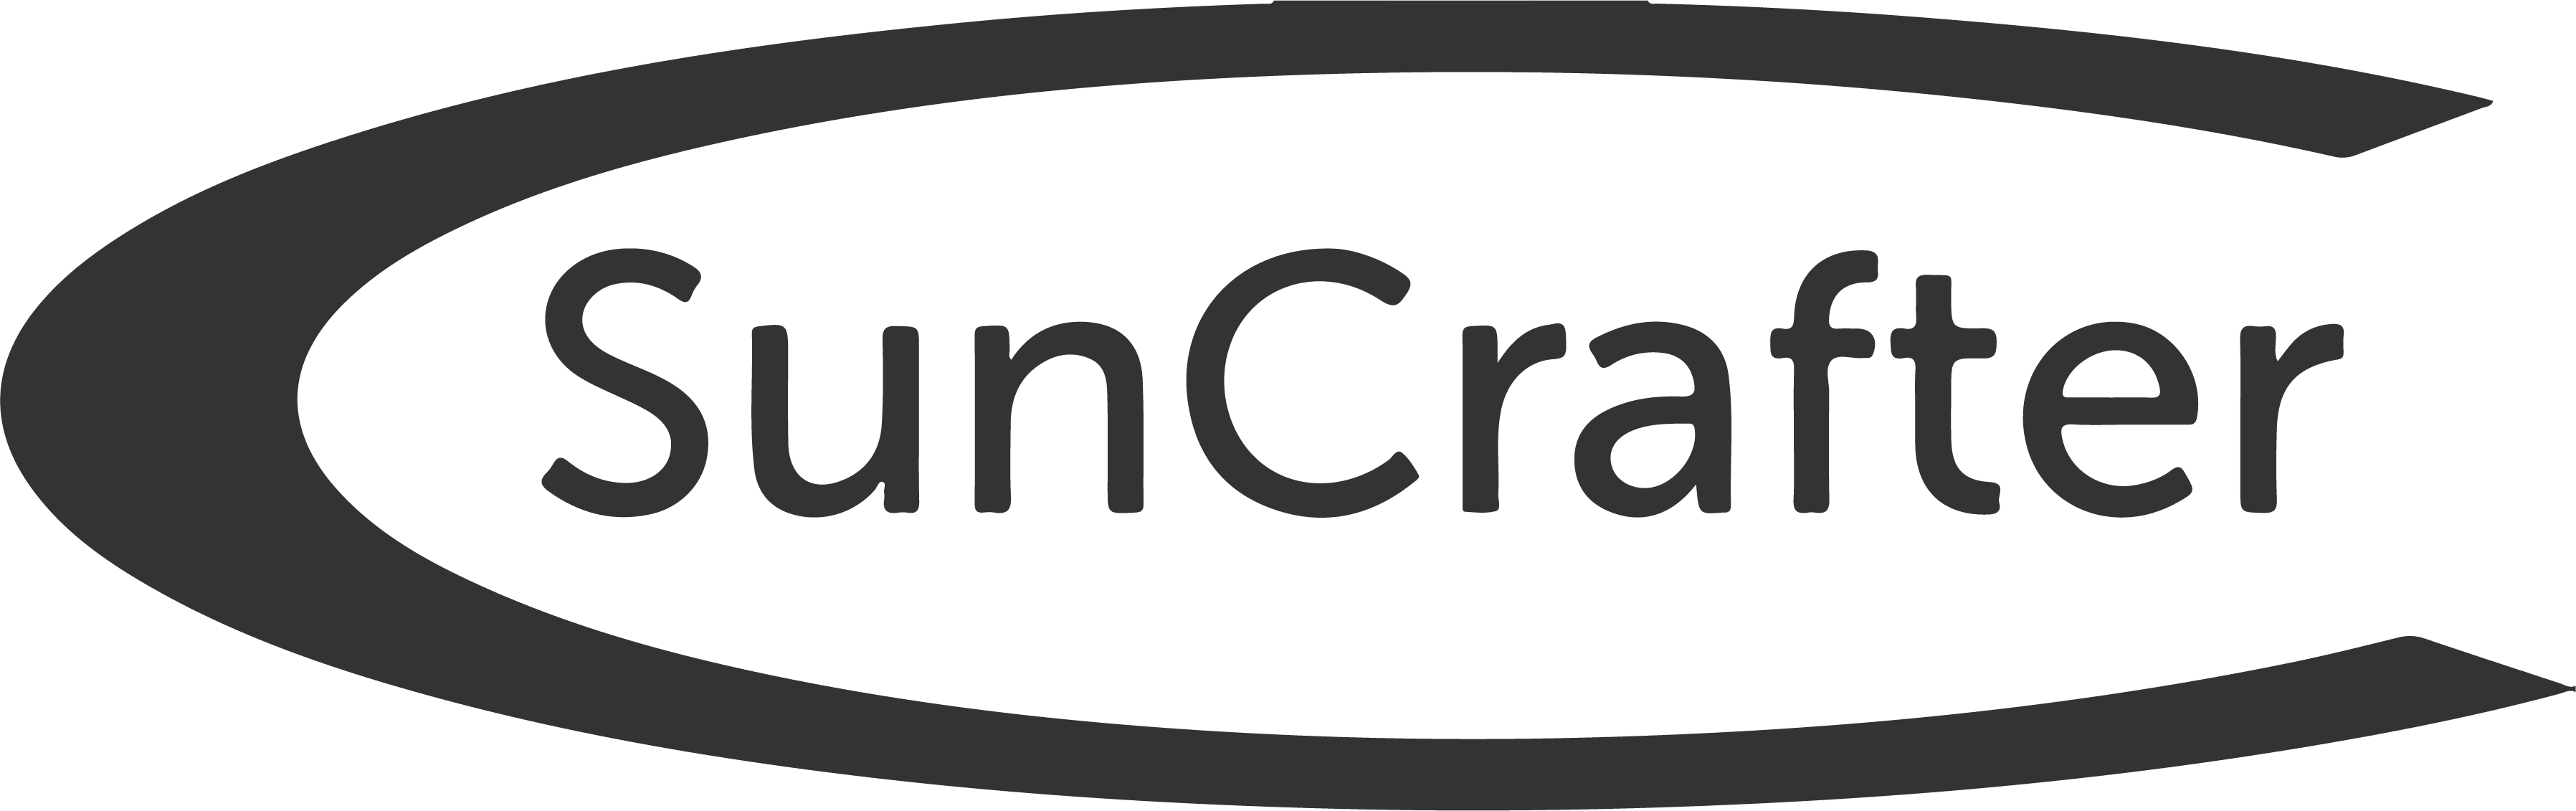 SunCrafter logo